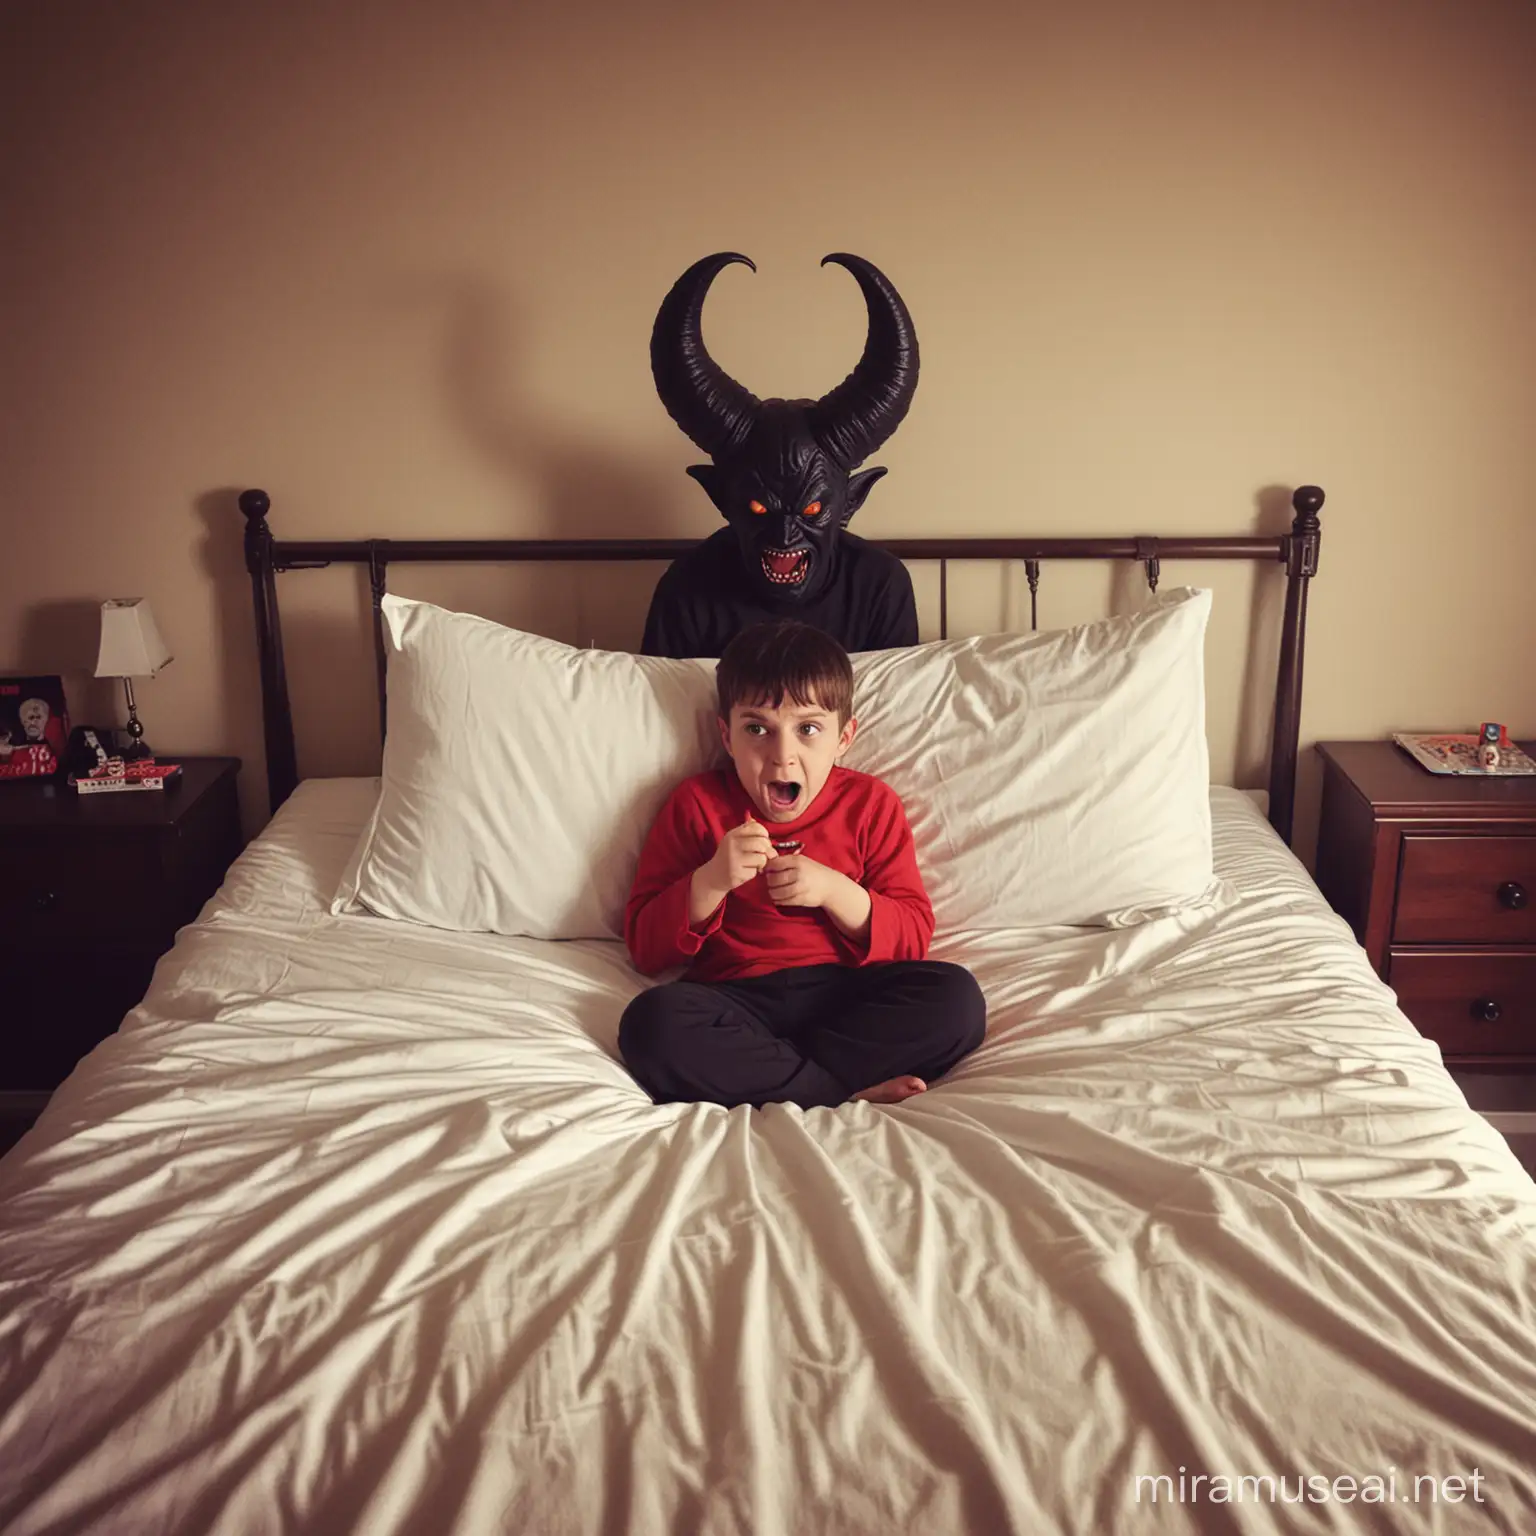 Terrifying Encounter Satan Haunts a Childs Bedroom